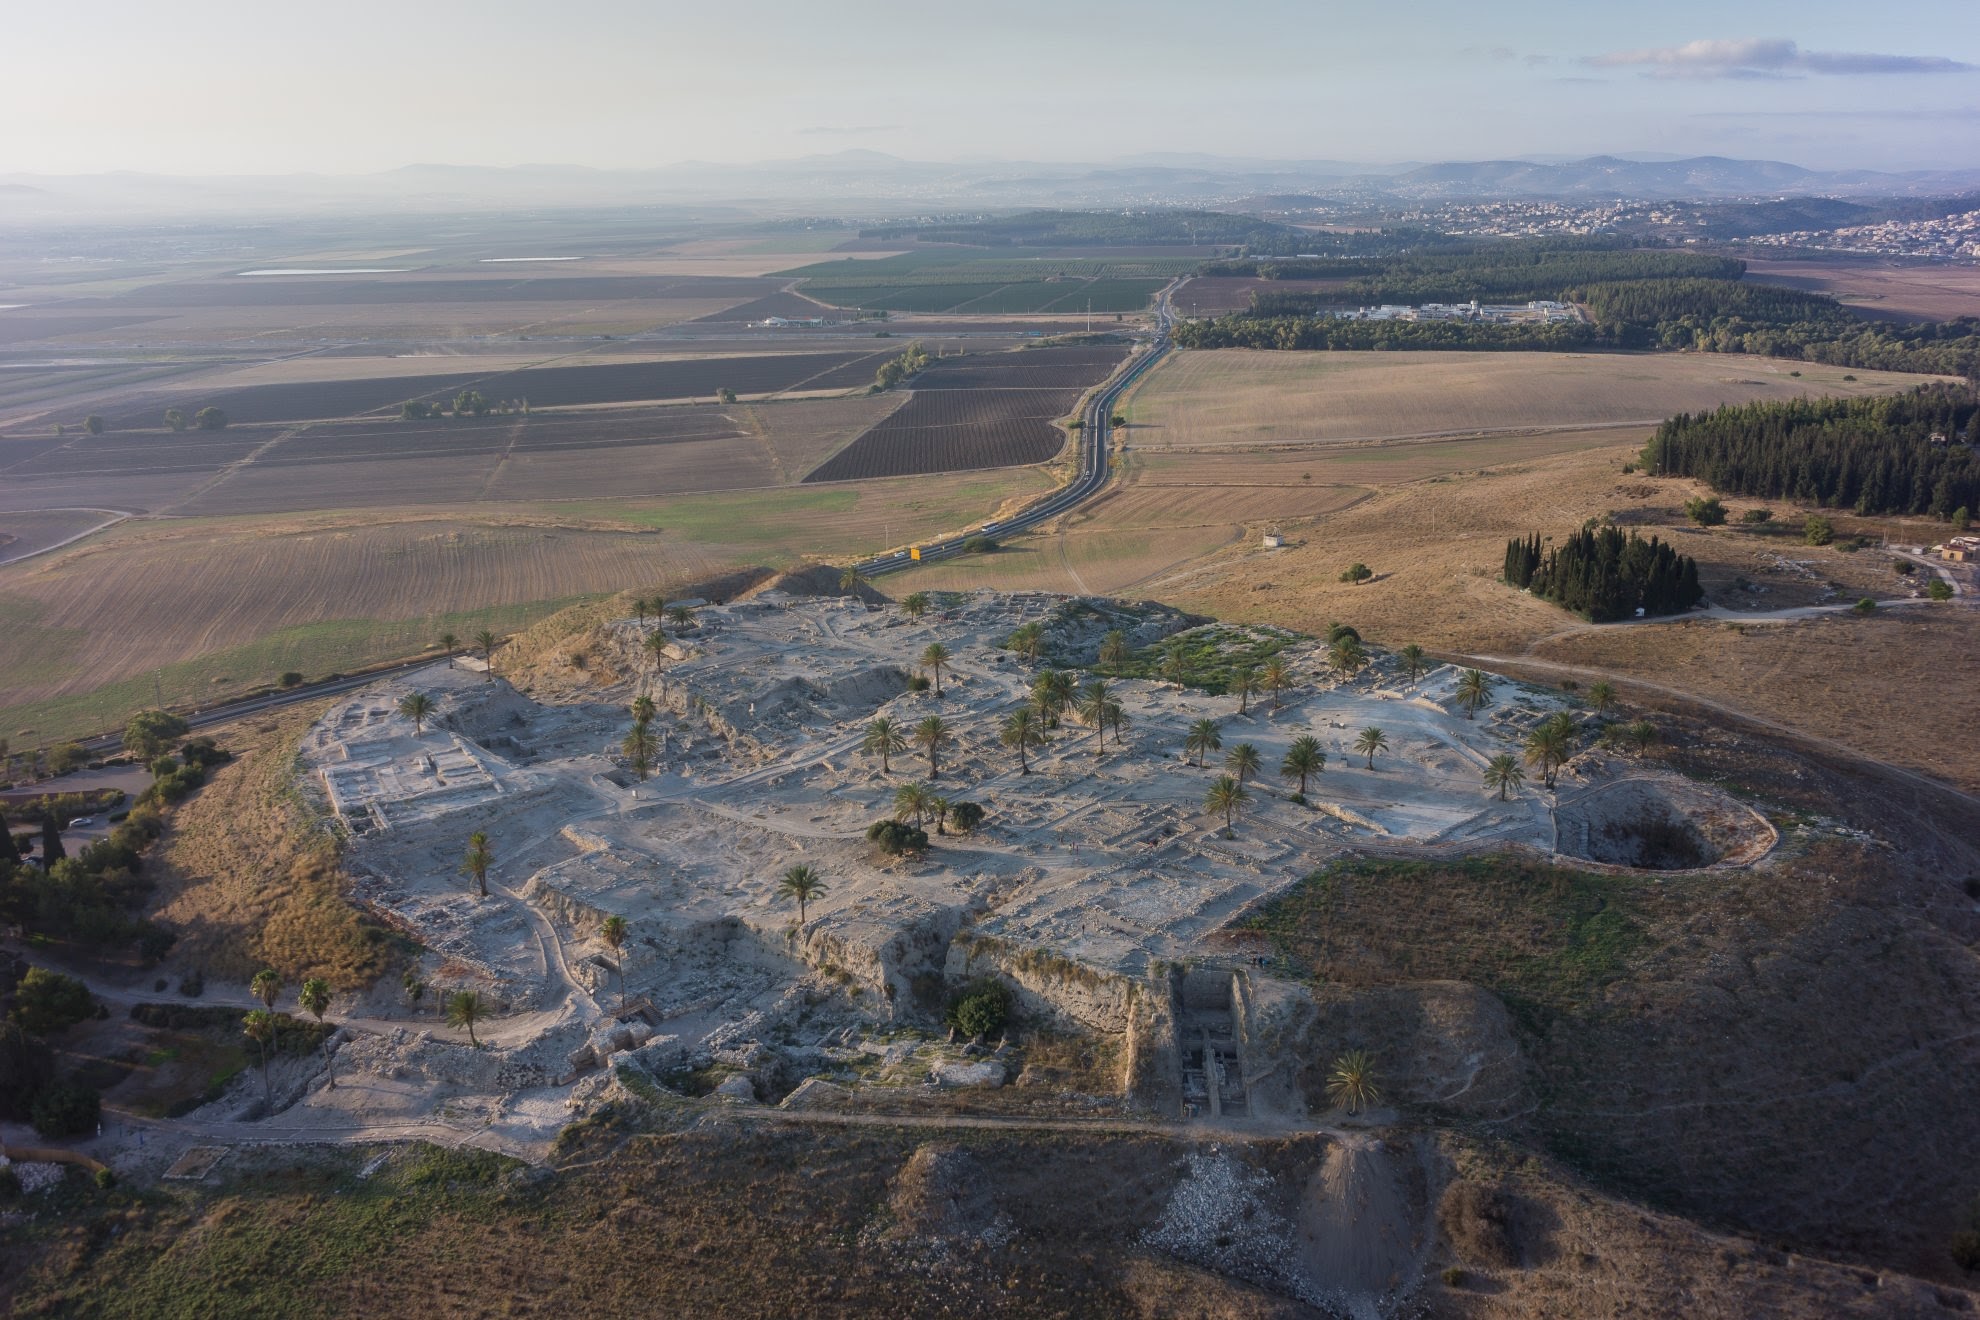 Megiddo Arial View courtesy of the Megiddo Expedition